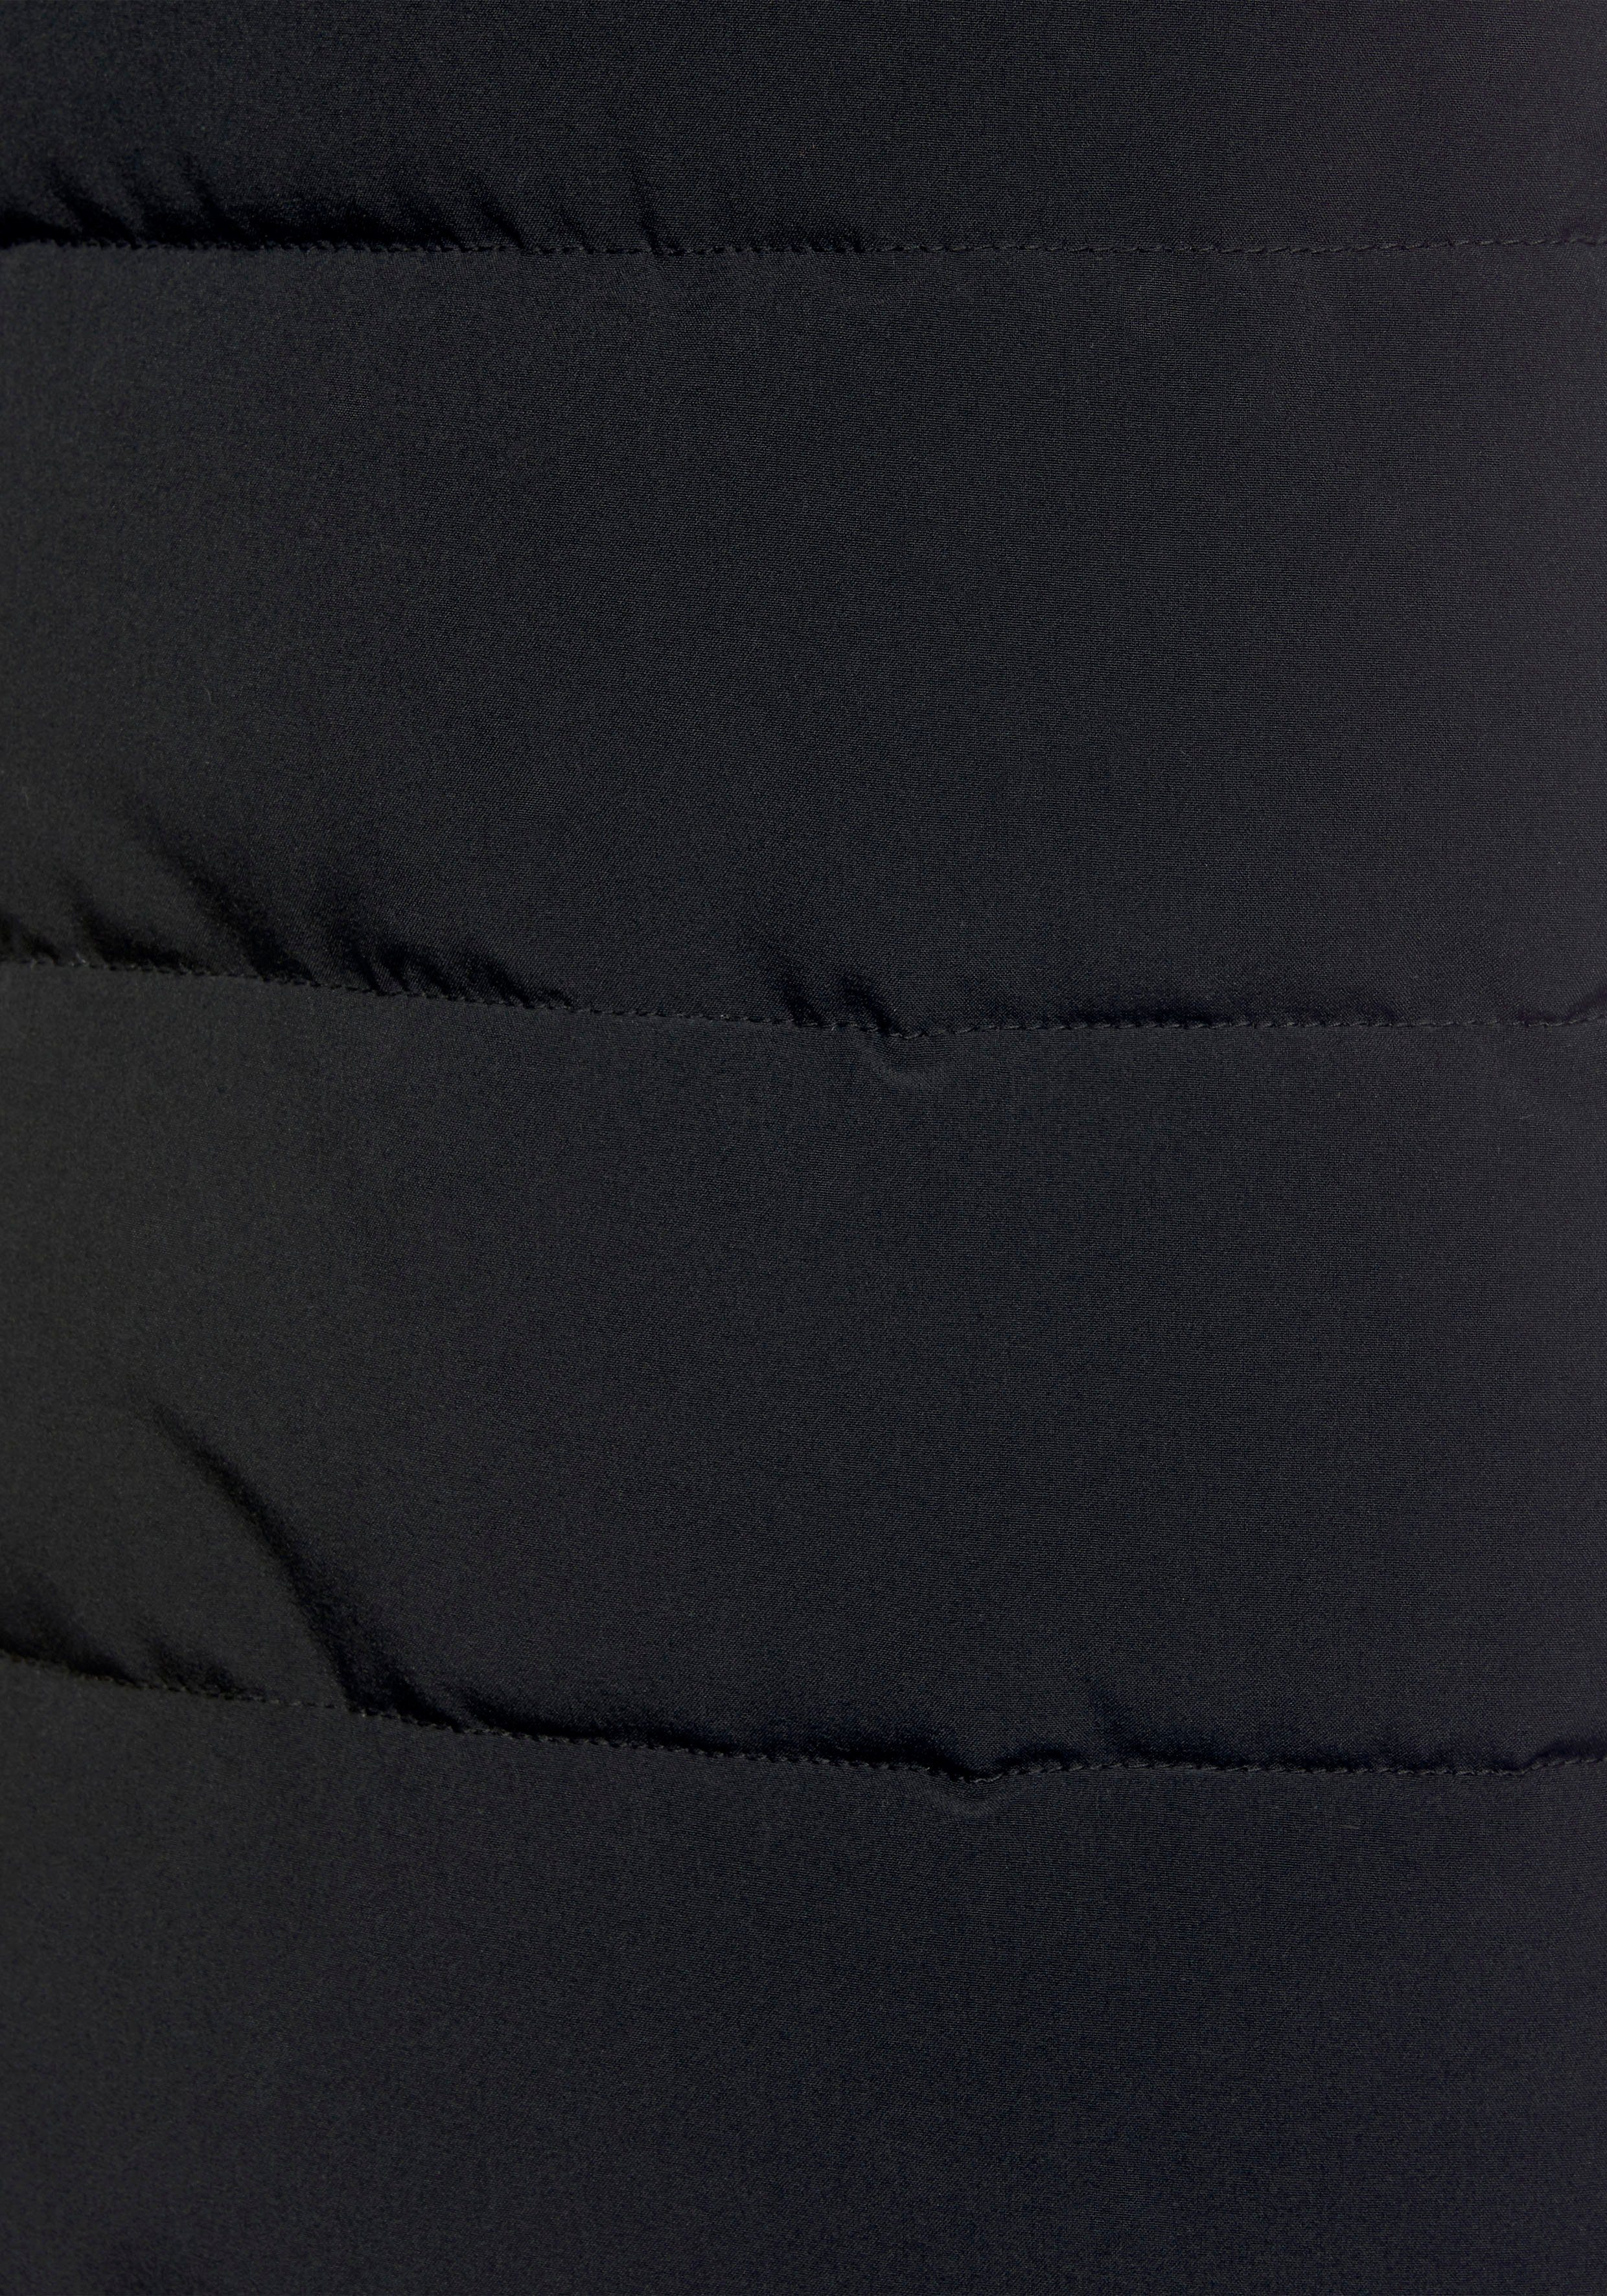 Steppmantel Gürtel black abnehmbarer ALPENBLITZ mit nachhaltigem Material) dem long Mantel auf Markenprägung aus Kuschel-Kapuze (Jacke Oslo &